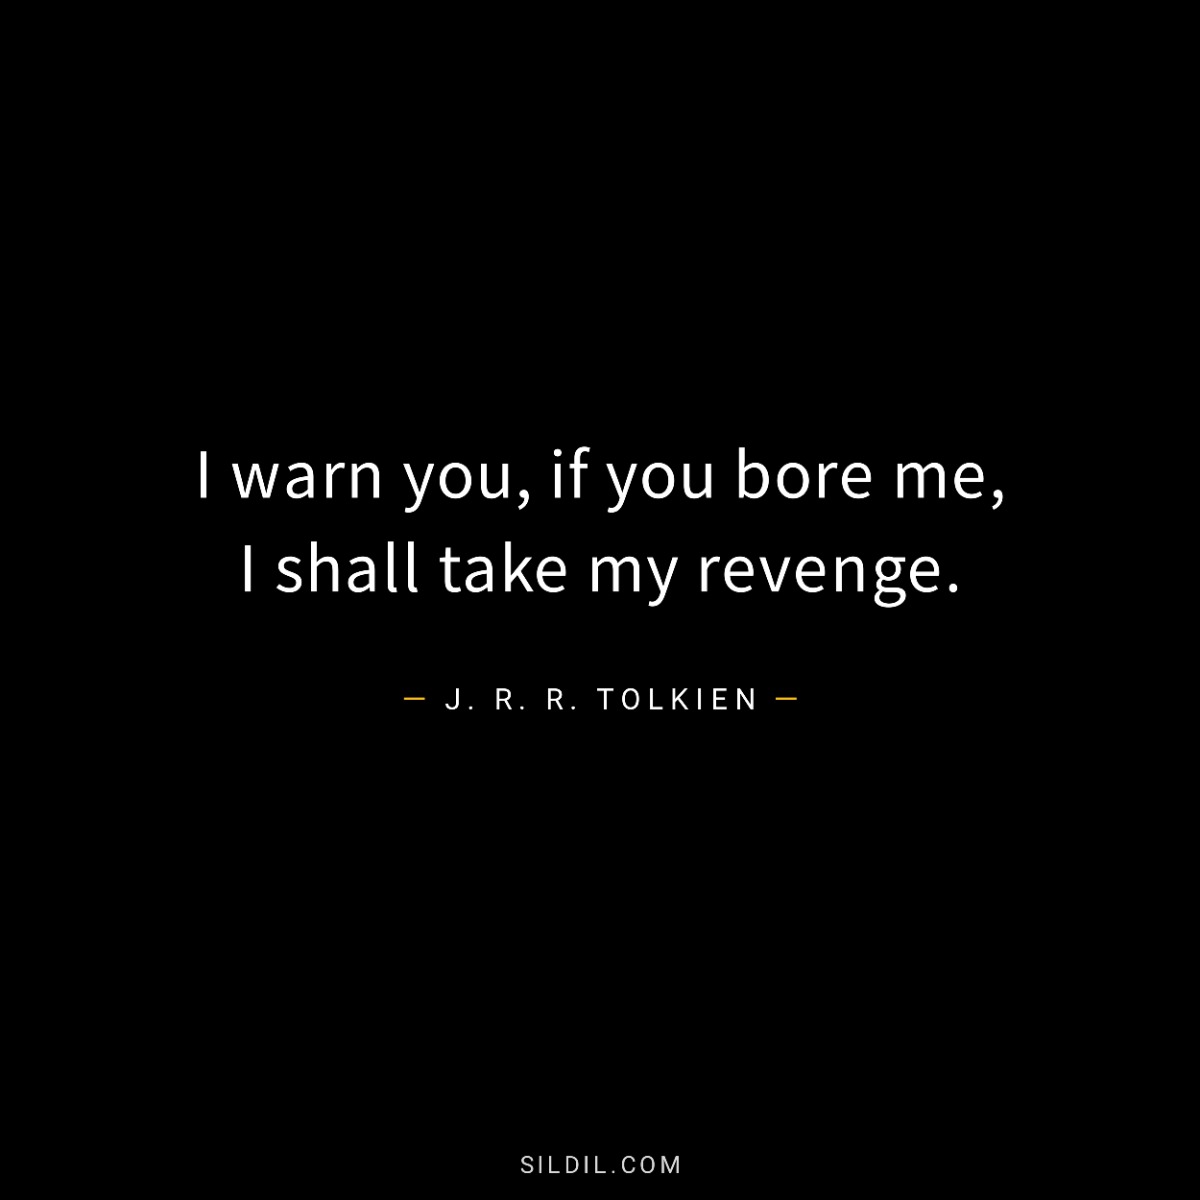 I warn you, if you bore me, I shall take my revenge.